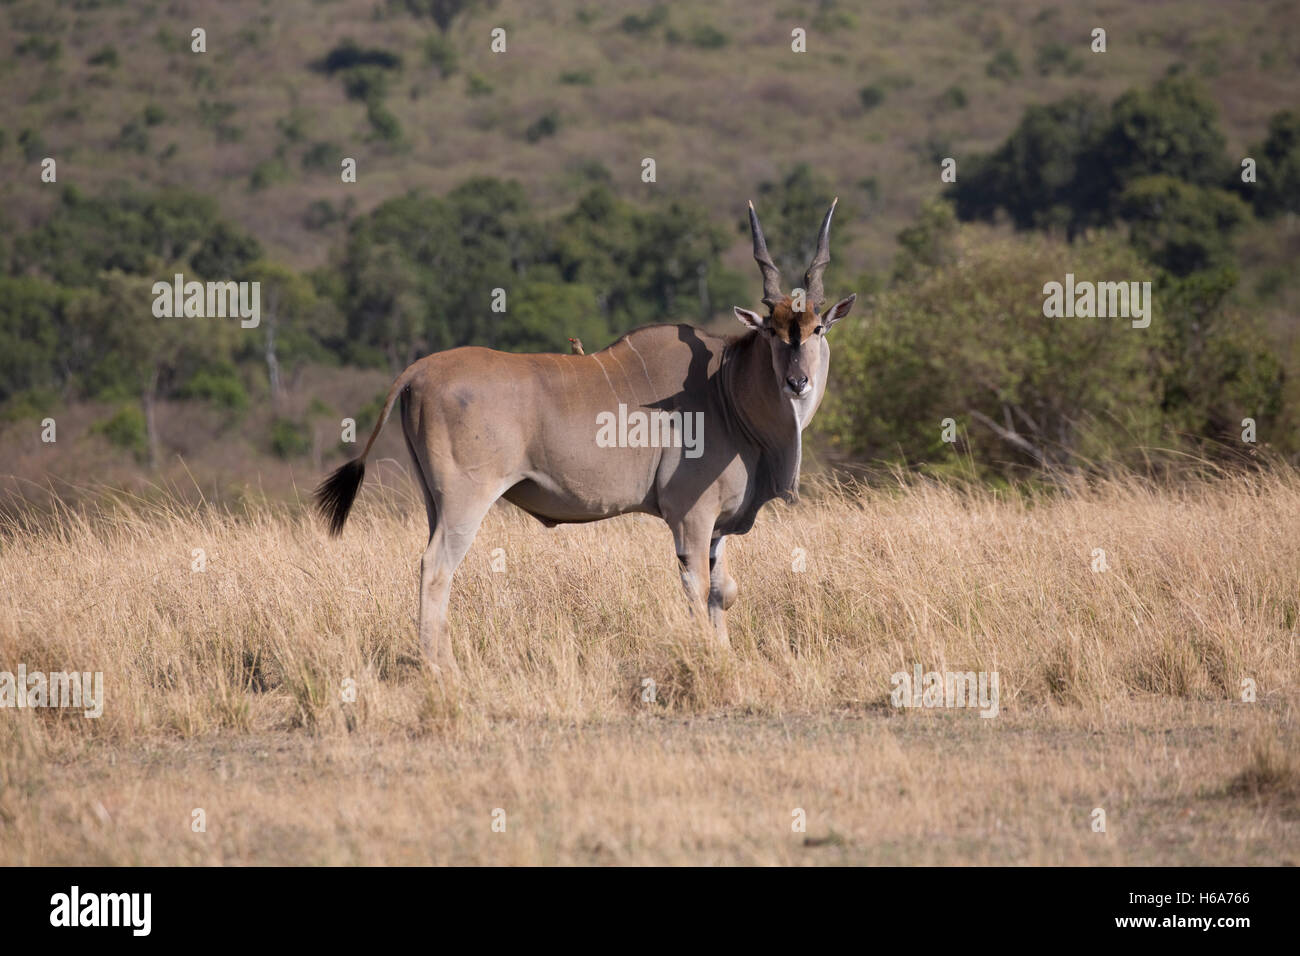 ein Eland Tauro Oryx in trockenen Savanne Grünland Masai Mara Kenia Stockfoto